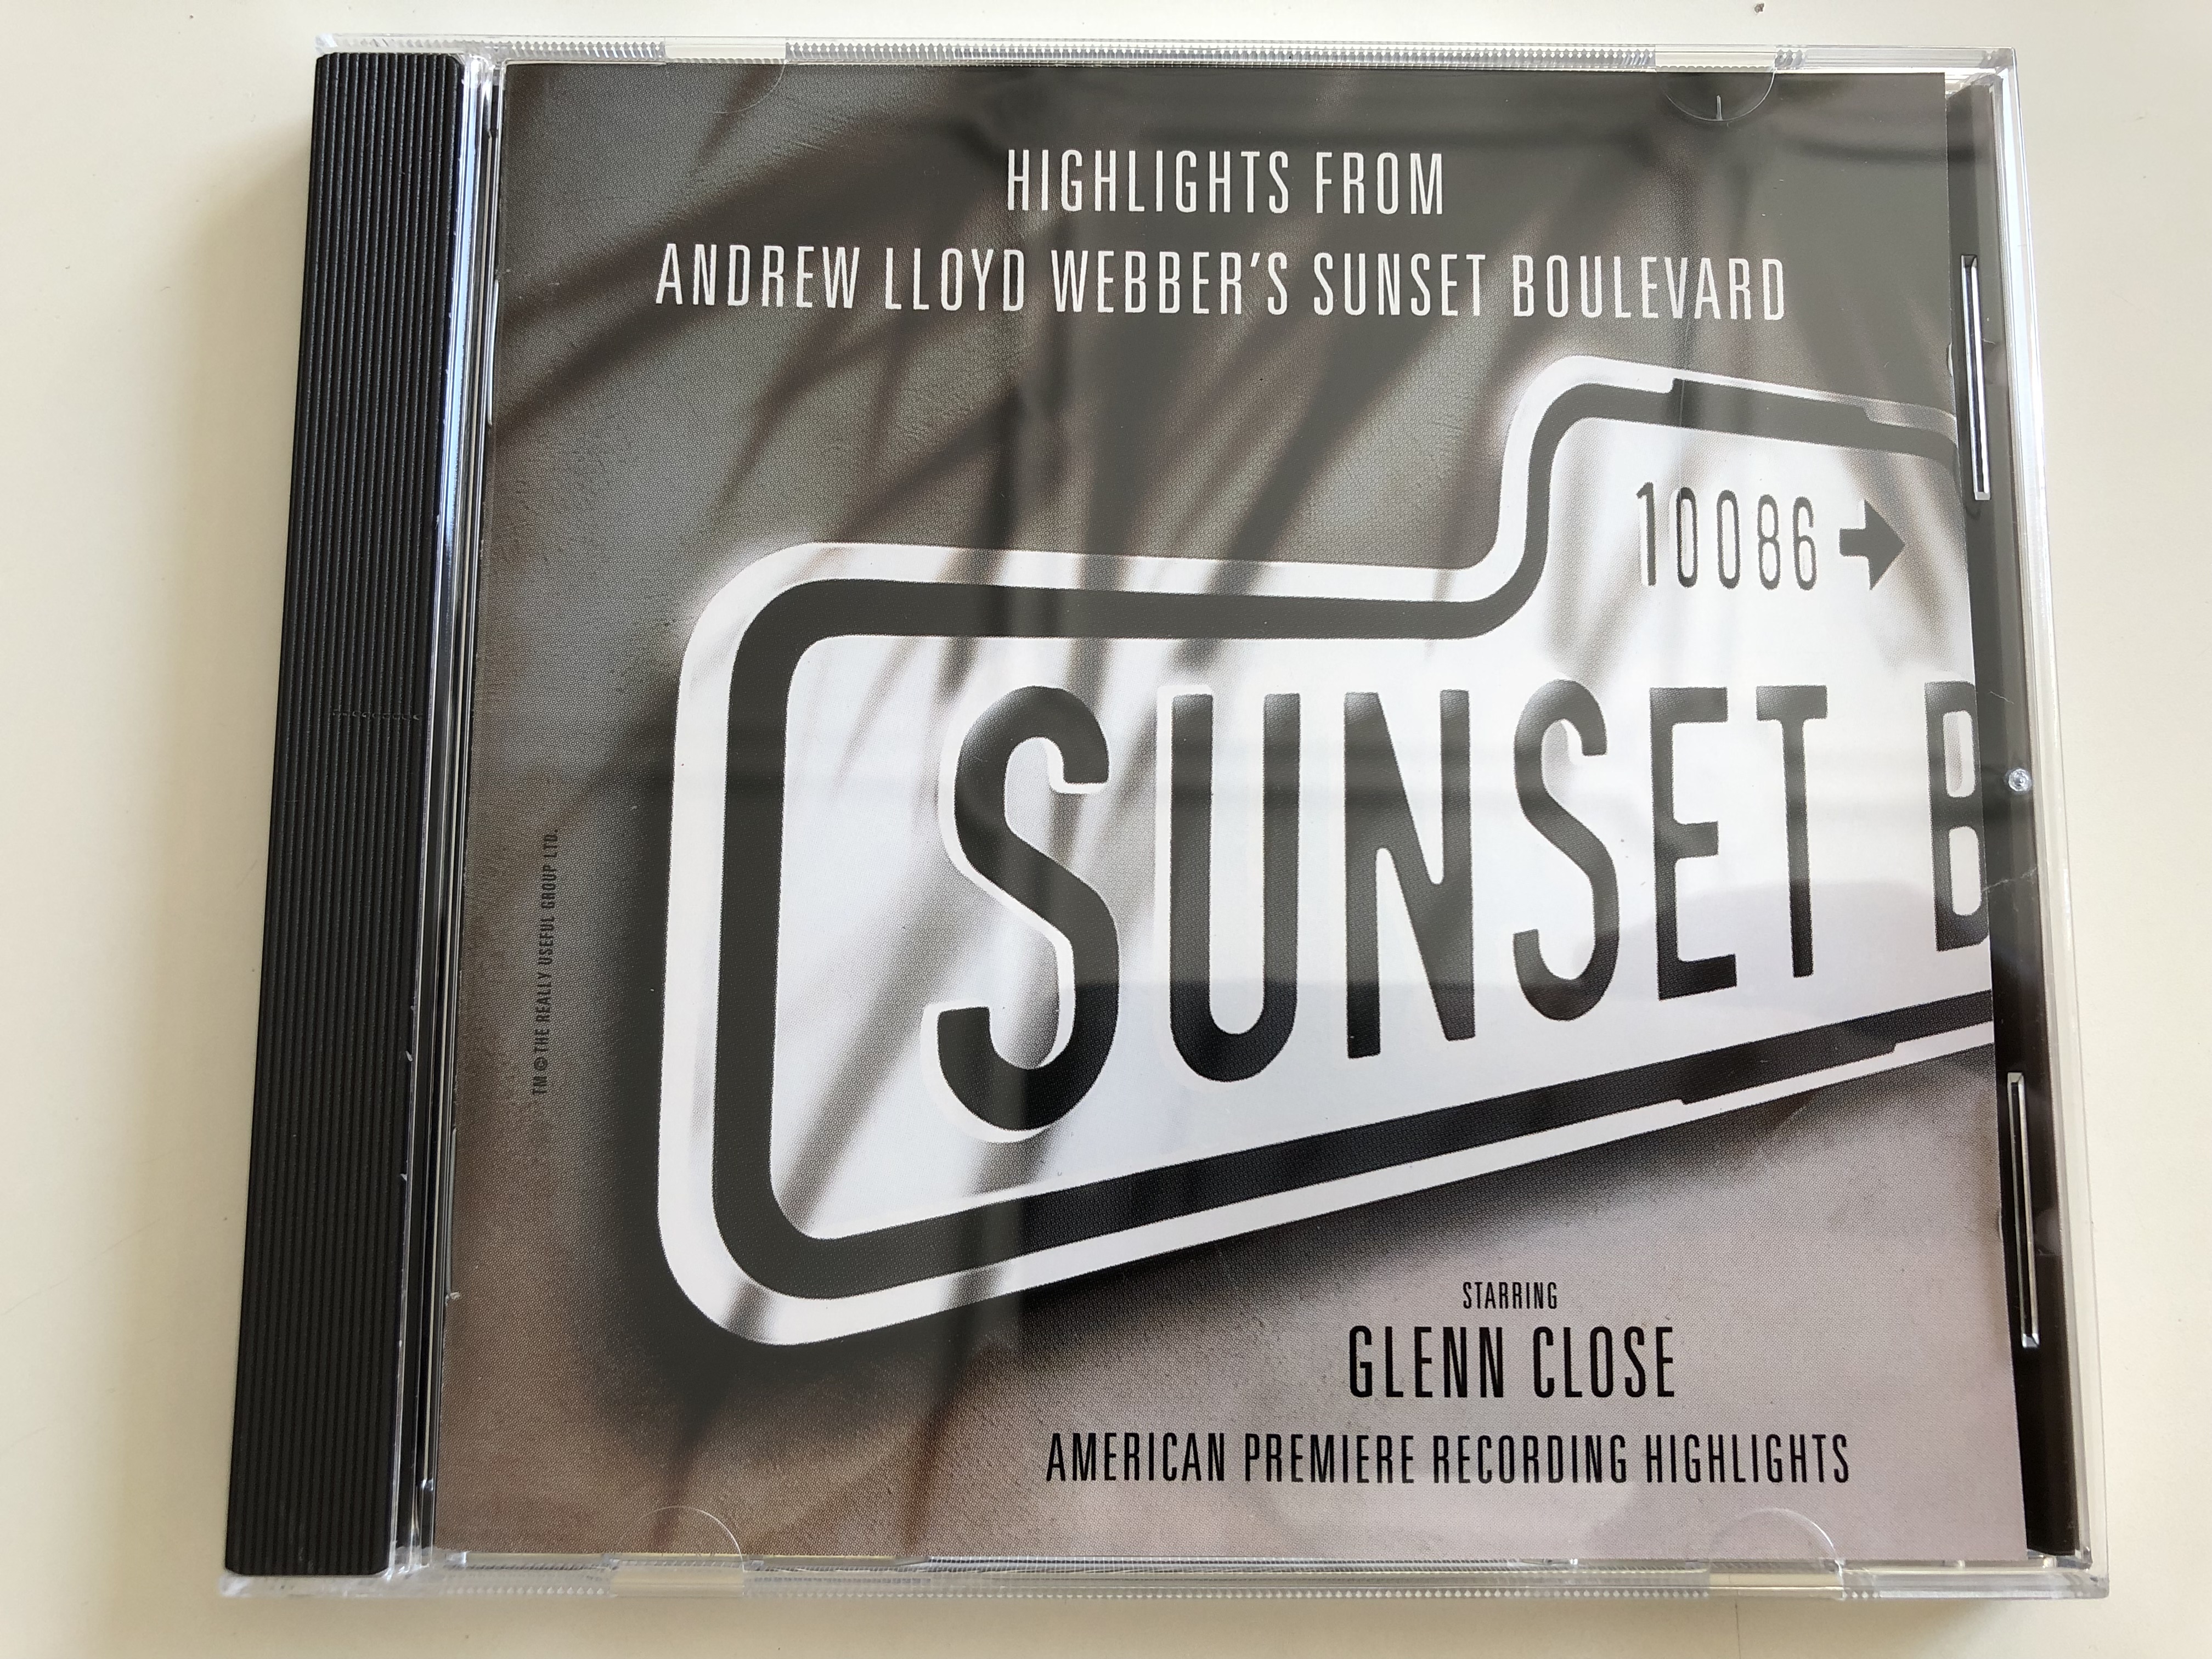 highlights-from-andrew-lloyd-webber-s-sunset-boulevard-starring-glenn-close-american-premiere-recording-highlights-audio-cd-1994-polydor-527241-2-1-.jpg